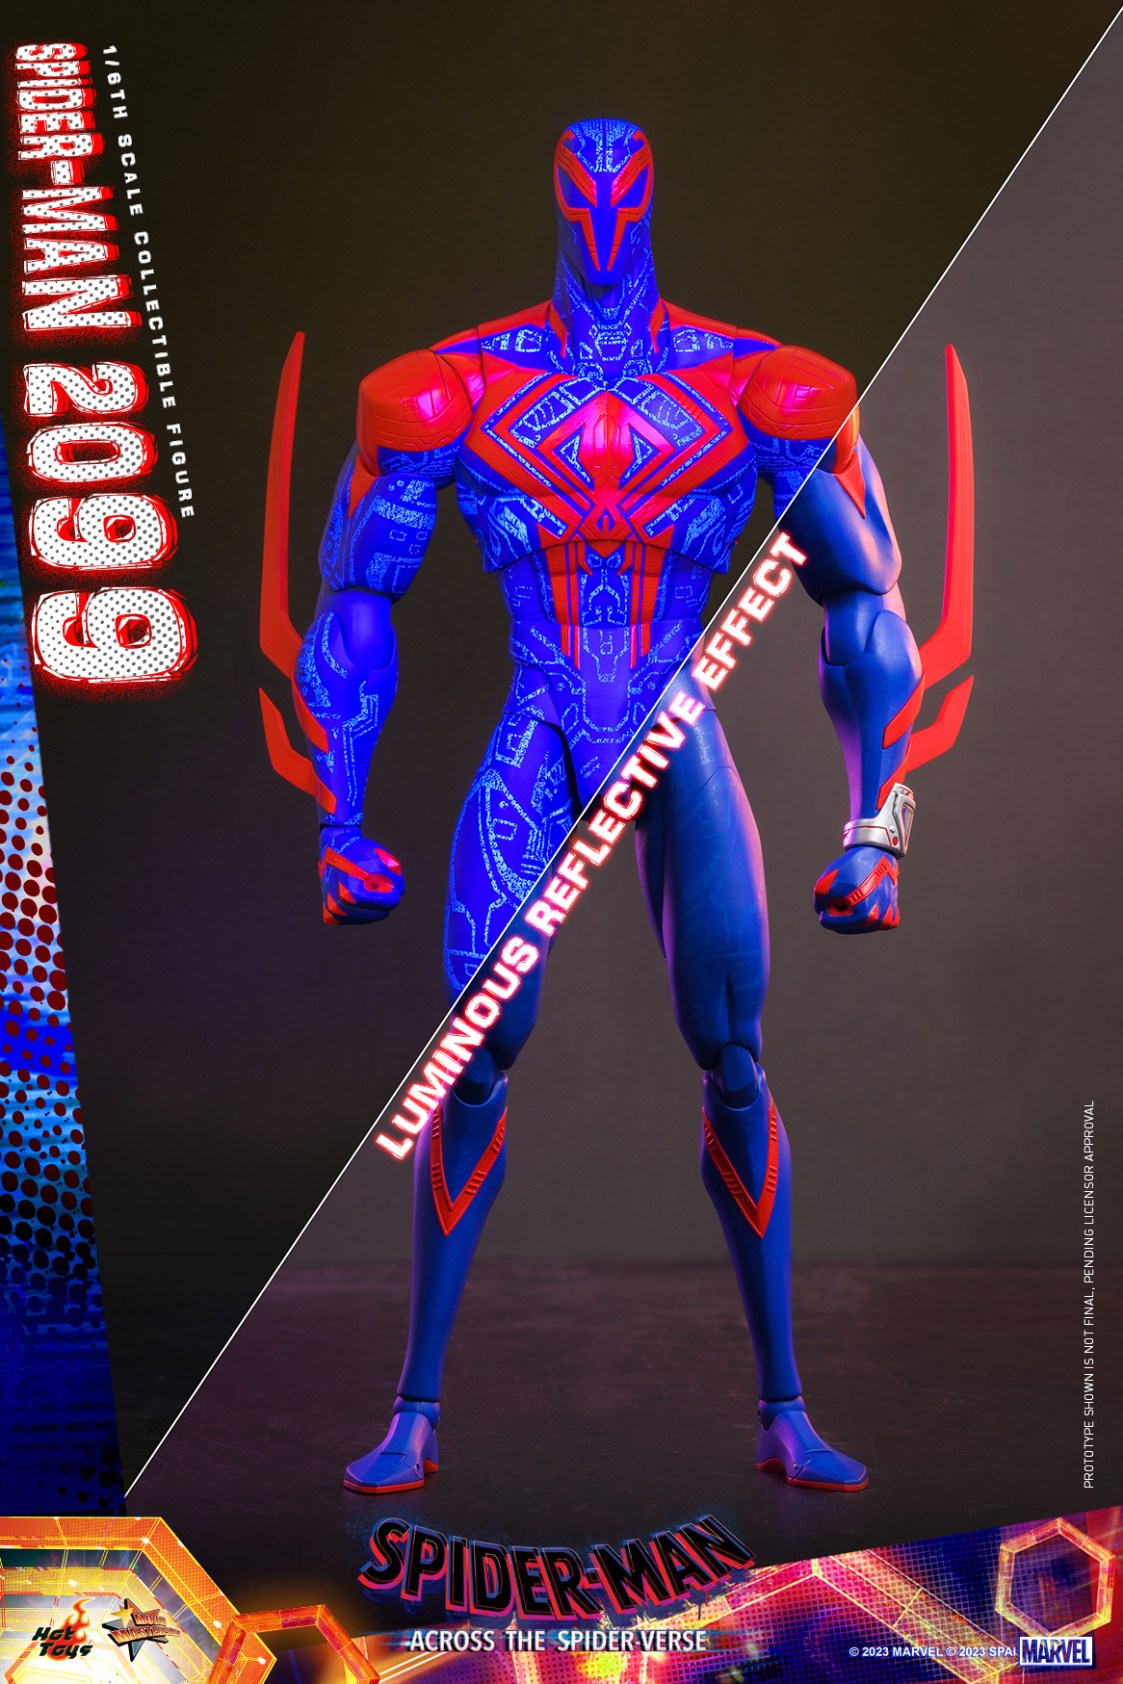 Spider-Man 2099 Hot Toys